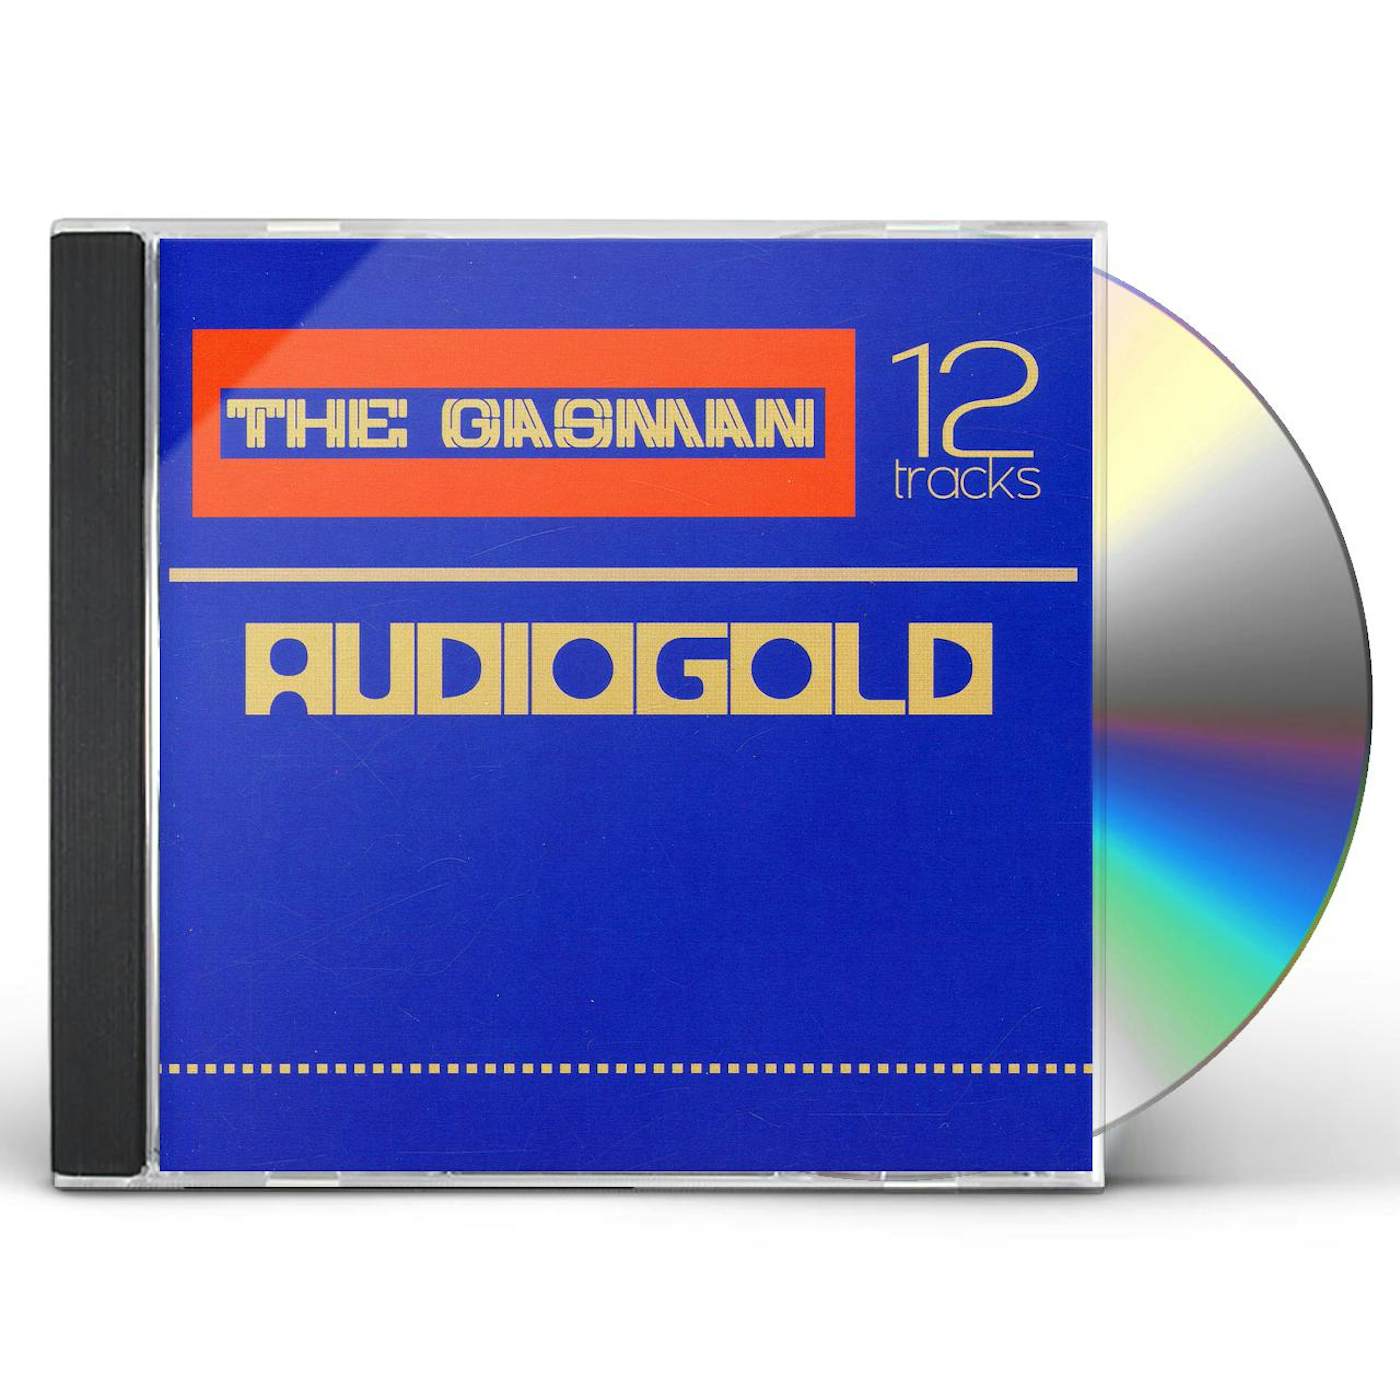 Gasman AUDIOGOLD CD